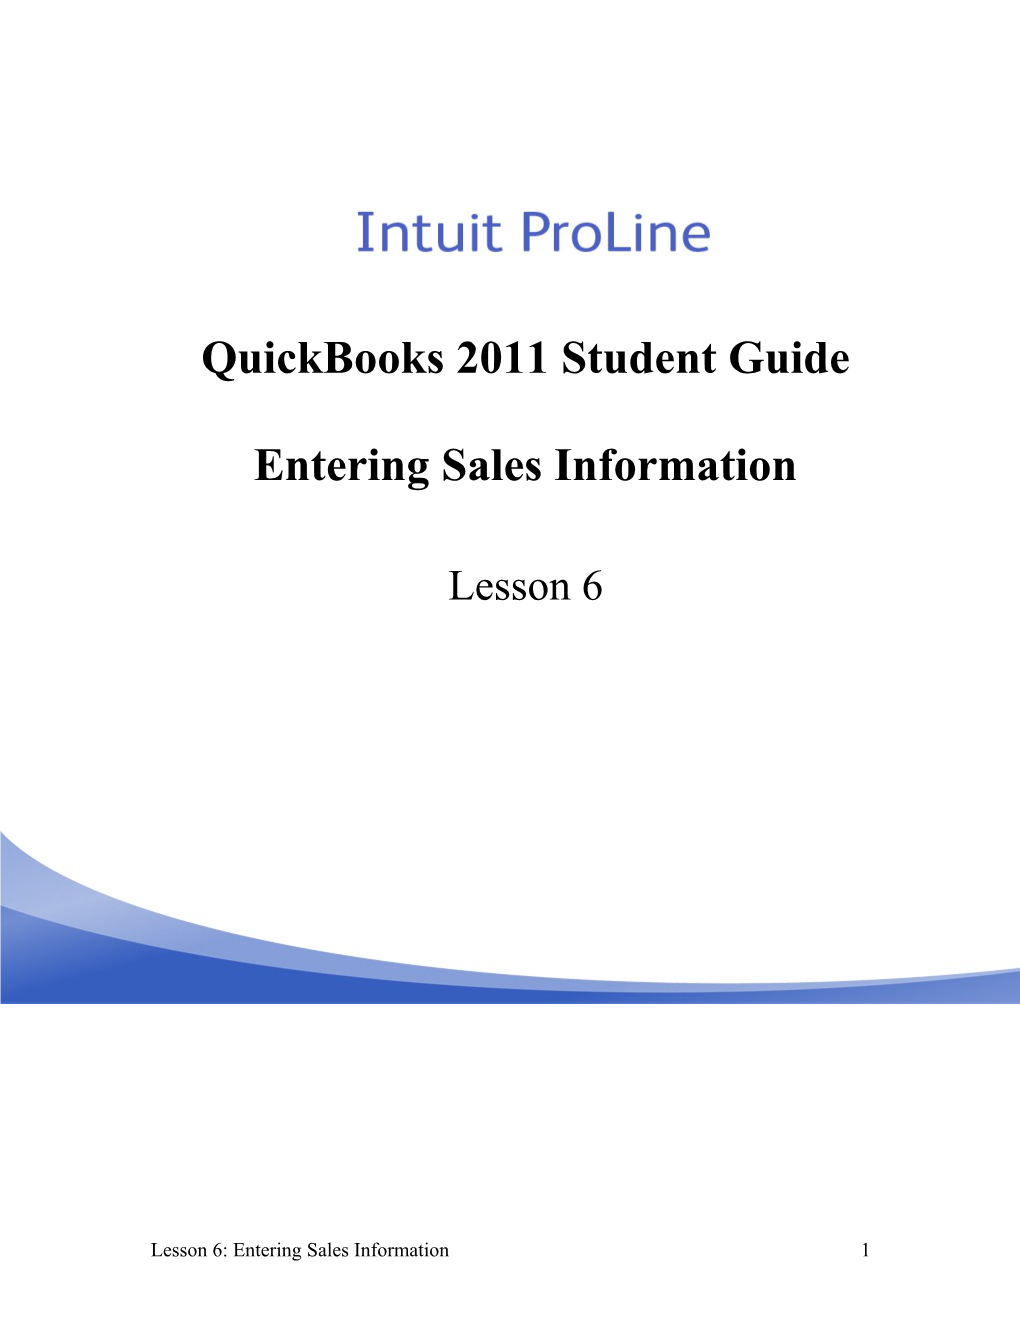 Quickbooks 2011 Student Guide